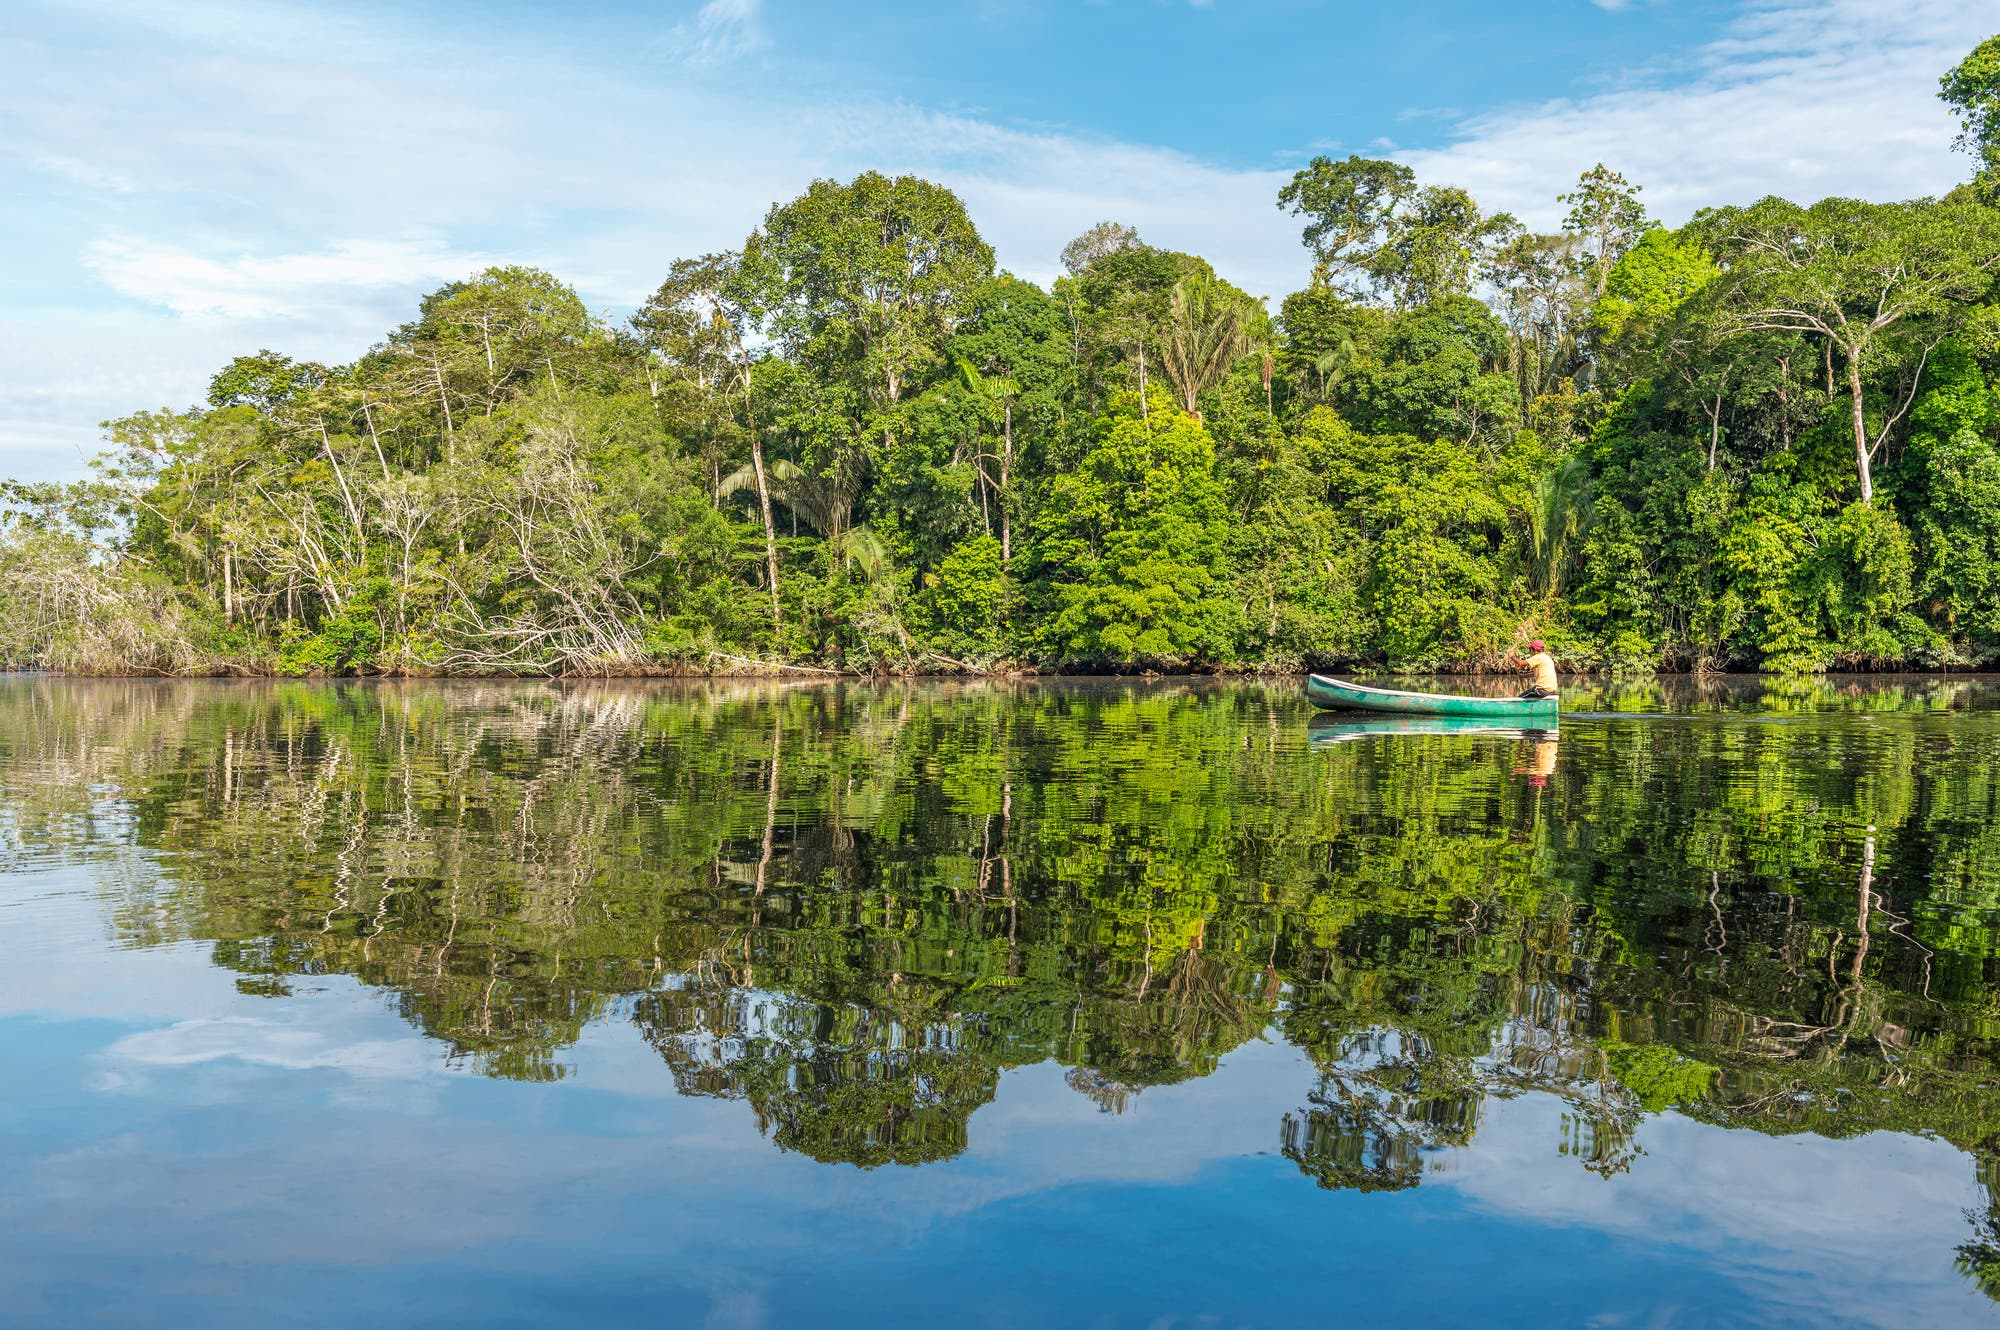 Mit dem Kanu auf dem Amazonas